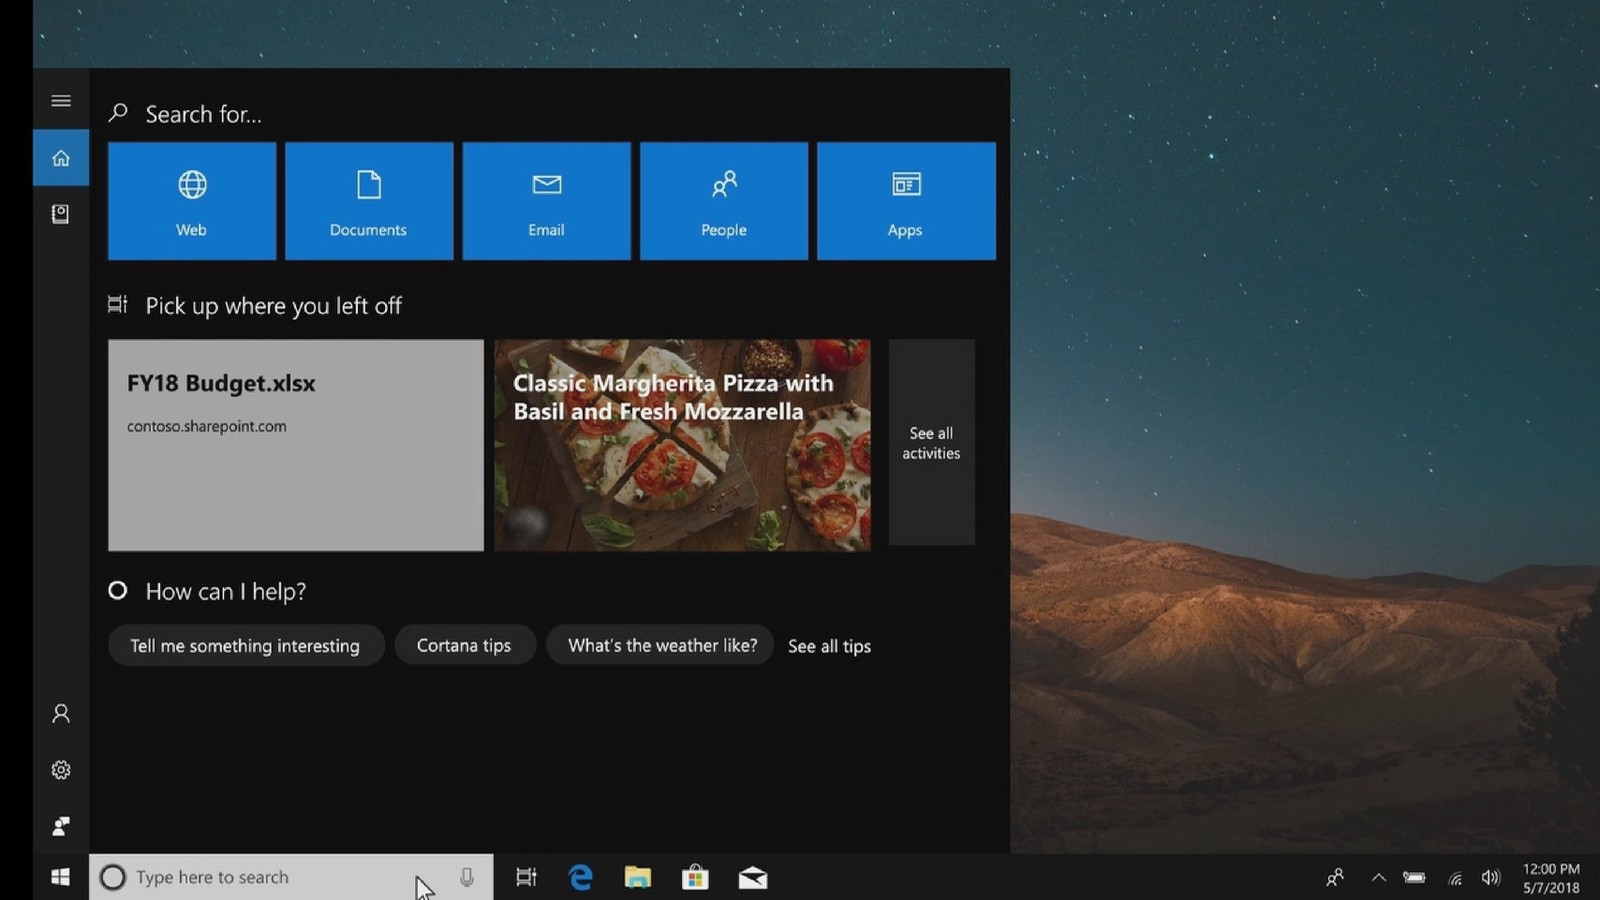 Feature Baru dan Perubahan Pada Windows 10 Version 1809